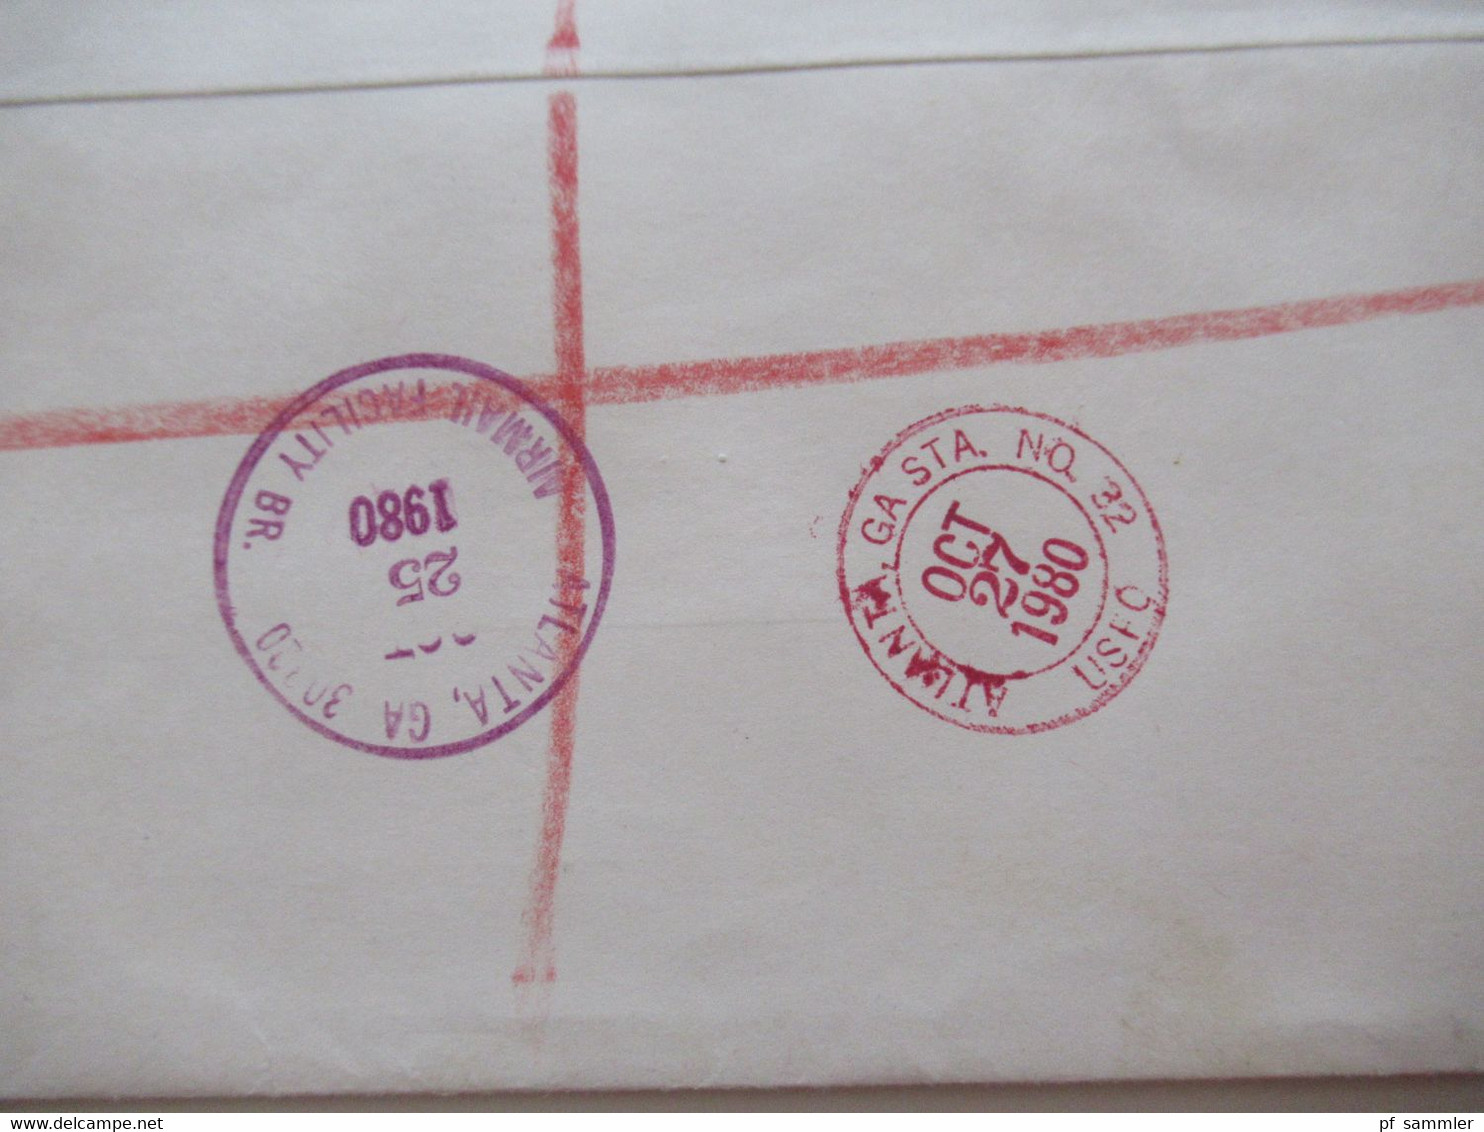 Australien 1980 Air Mail In Die USA Einschreiben Parliament House New South Wales Umschlag Legislative Assembly - Lettres & Documents